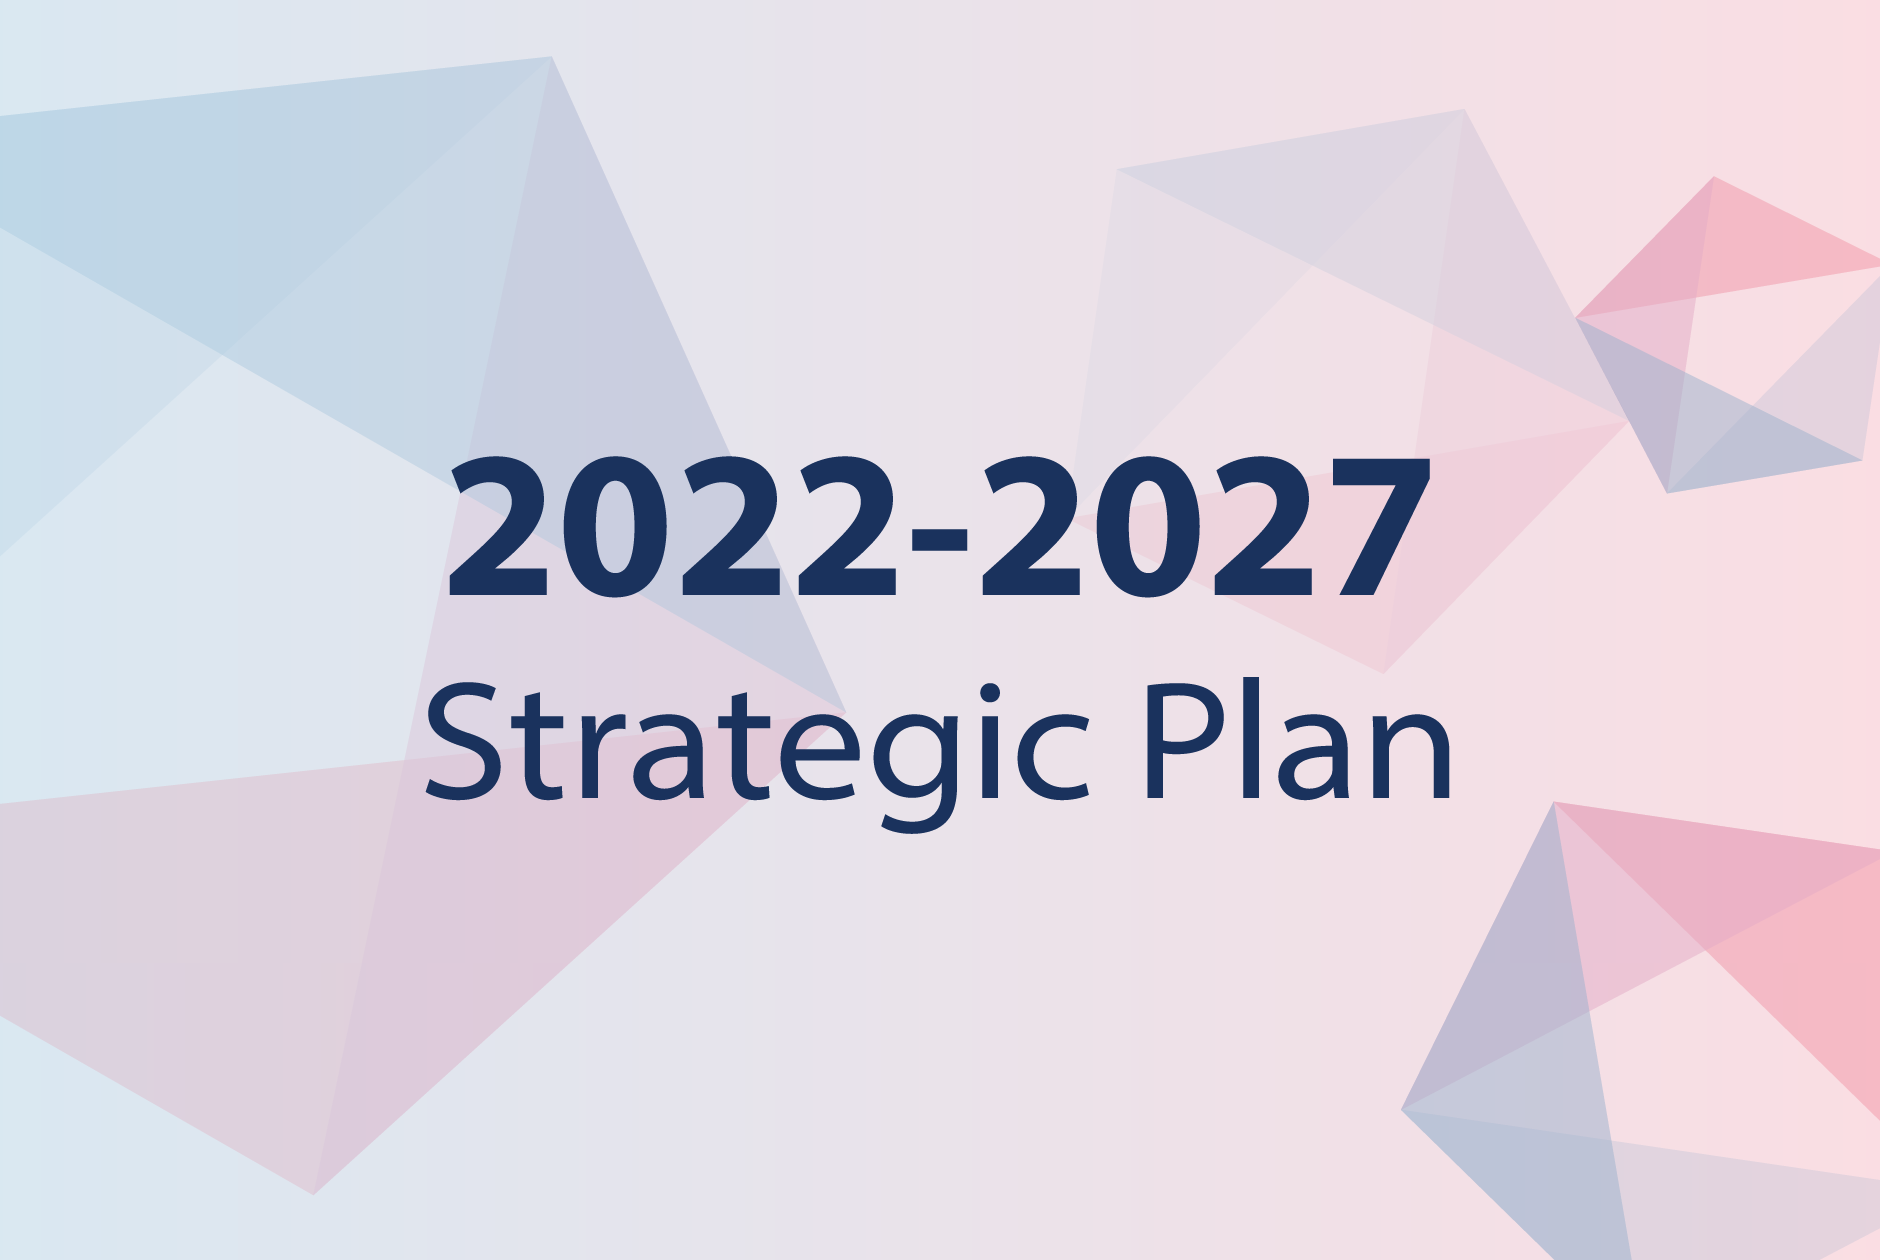 2022-2027 strategic plan text